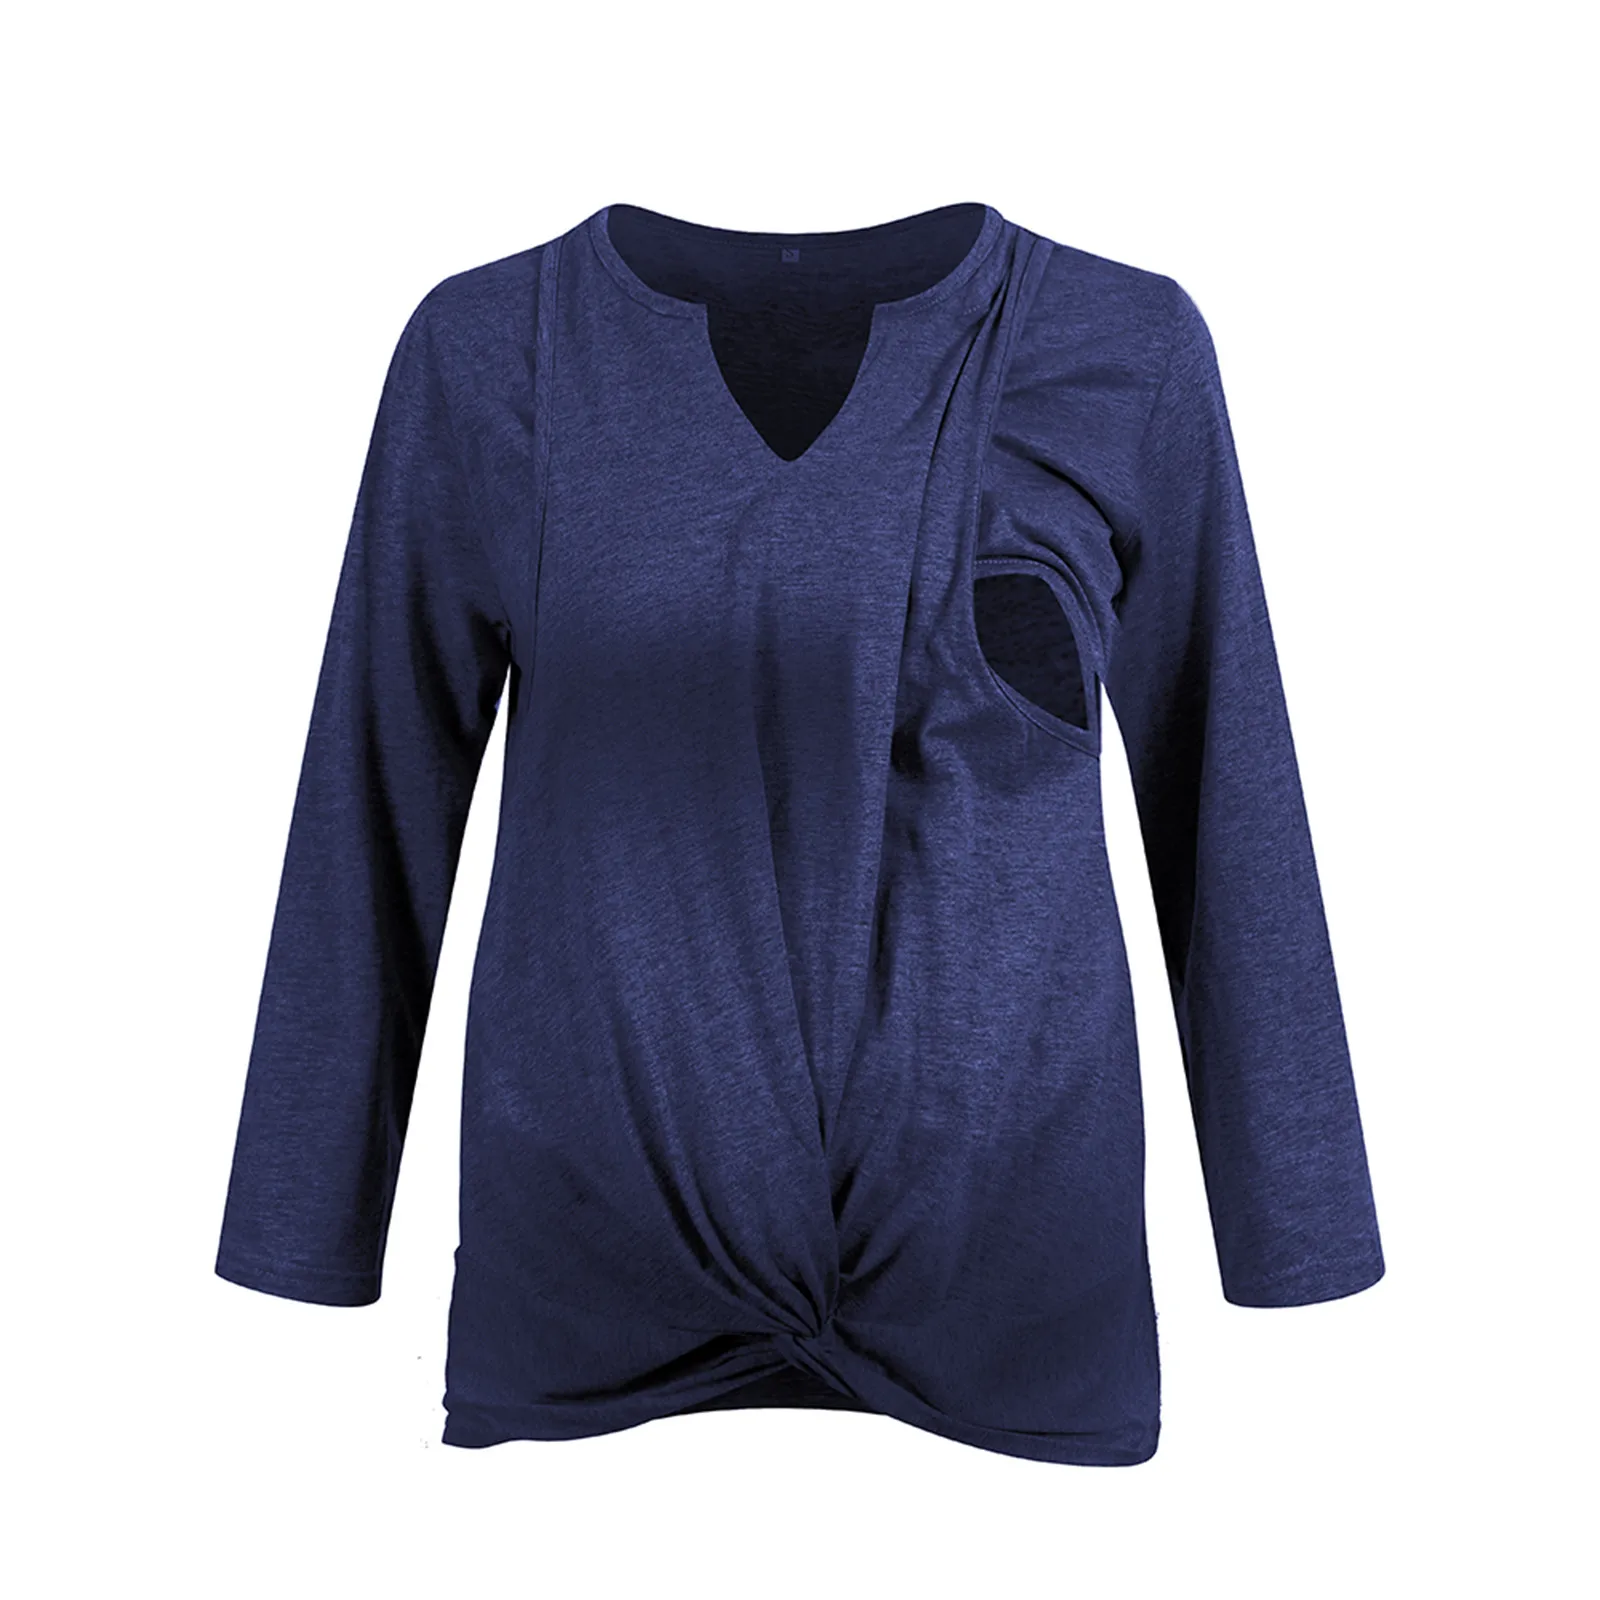 Pregnant Women Upper Clothes Spring And Autumn Mammourmed T-Shirt Loose S-Xxl Breastfeeding T Shirt футболка для беременных F4